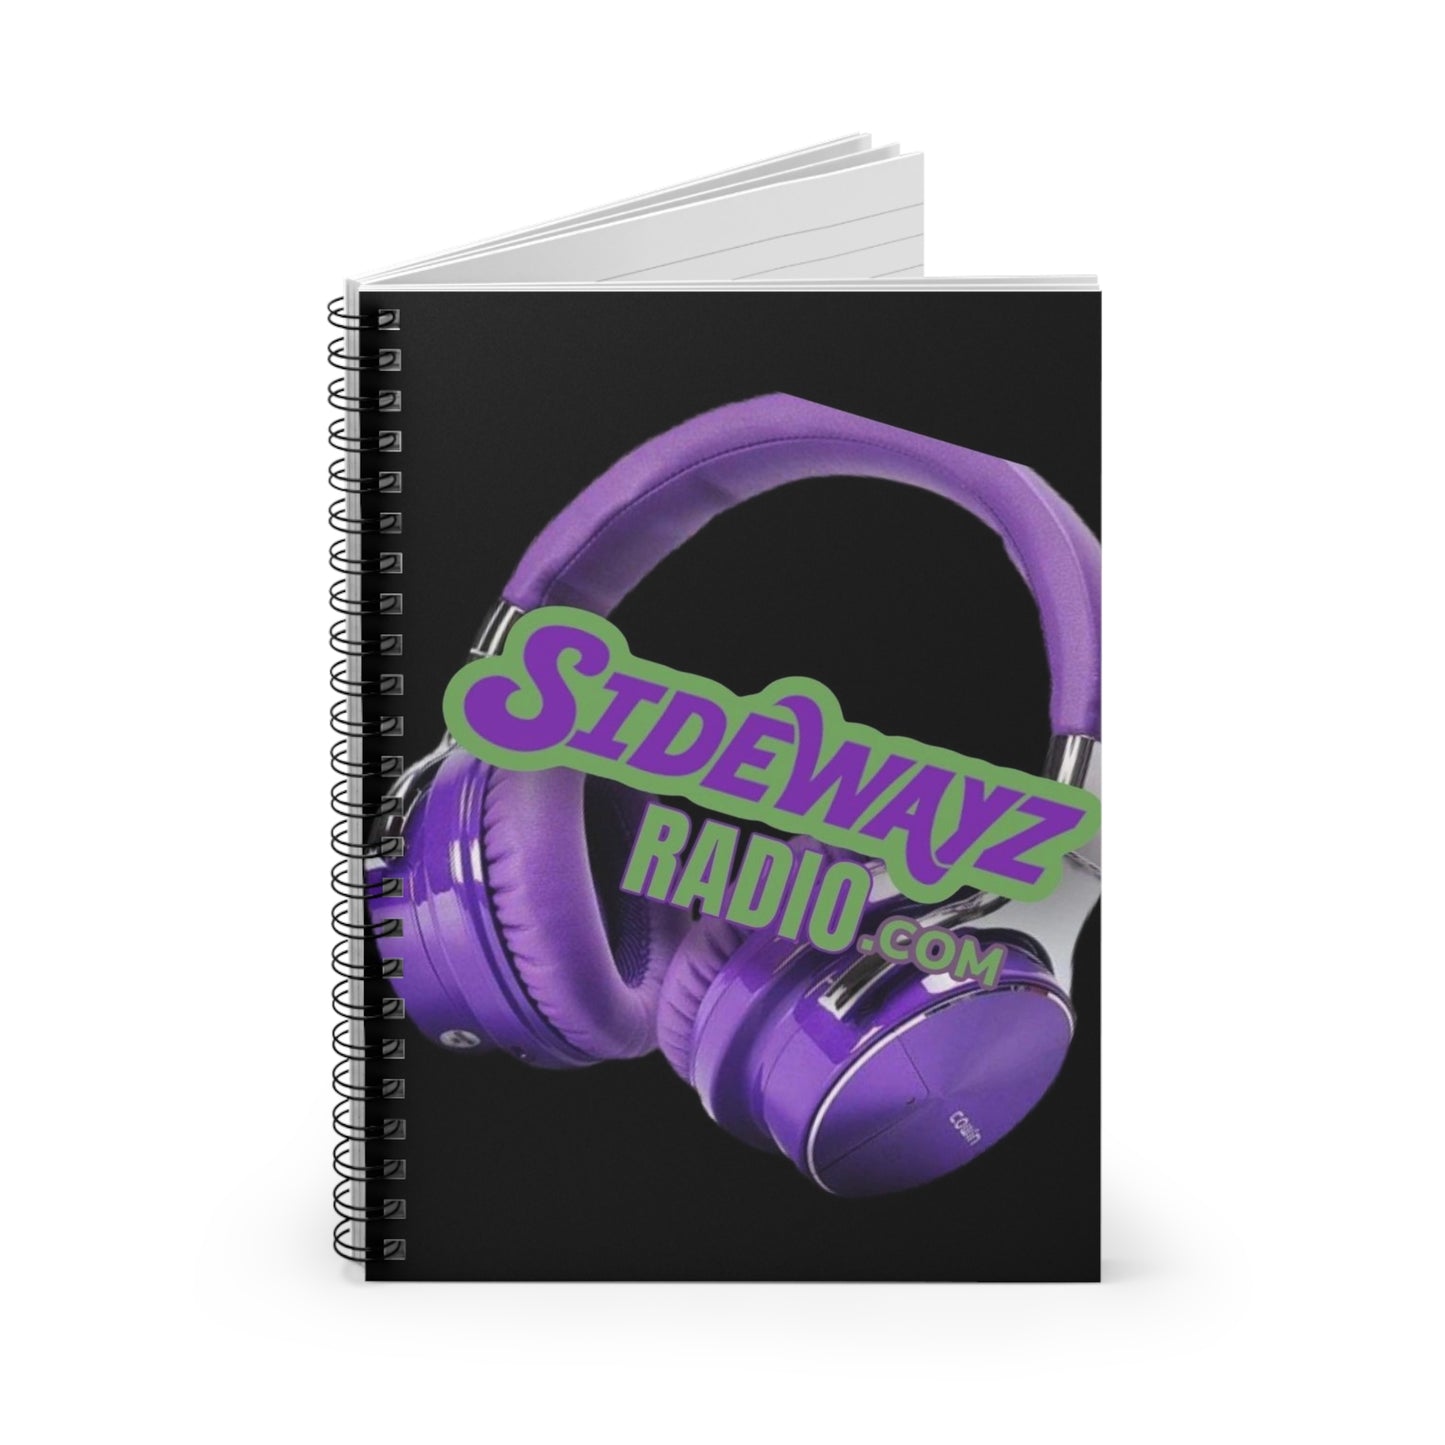 SidewayzRadio.com Spiral Notebook - Ruled Line